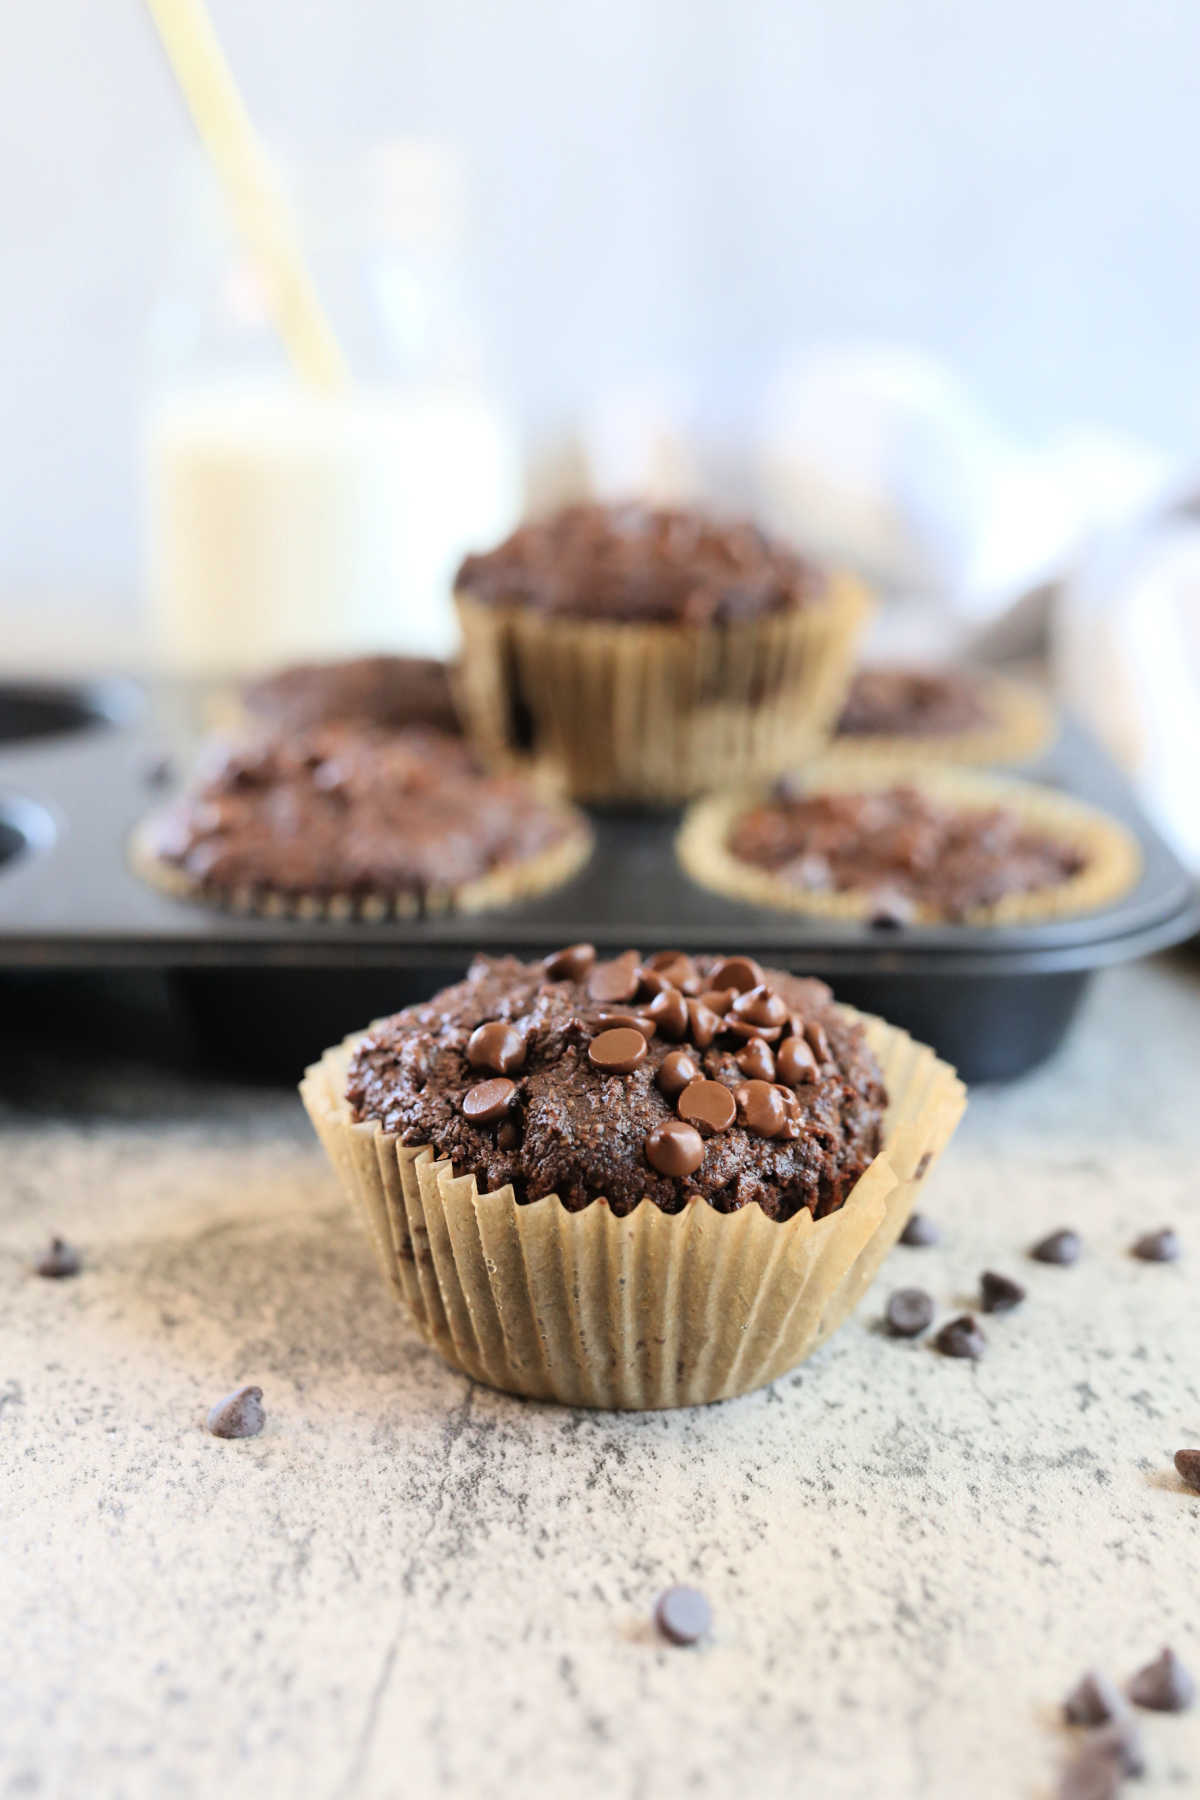 Flourless Chocolate Muffins with gluten-free ingredients